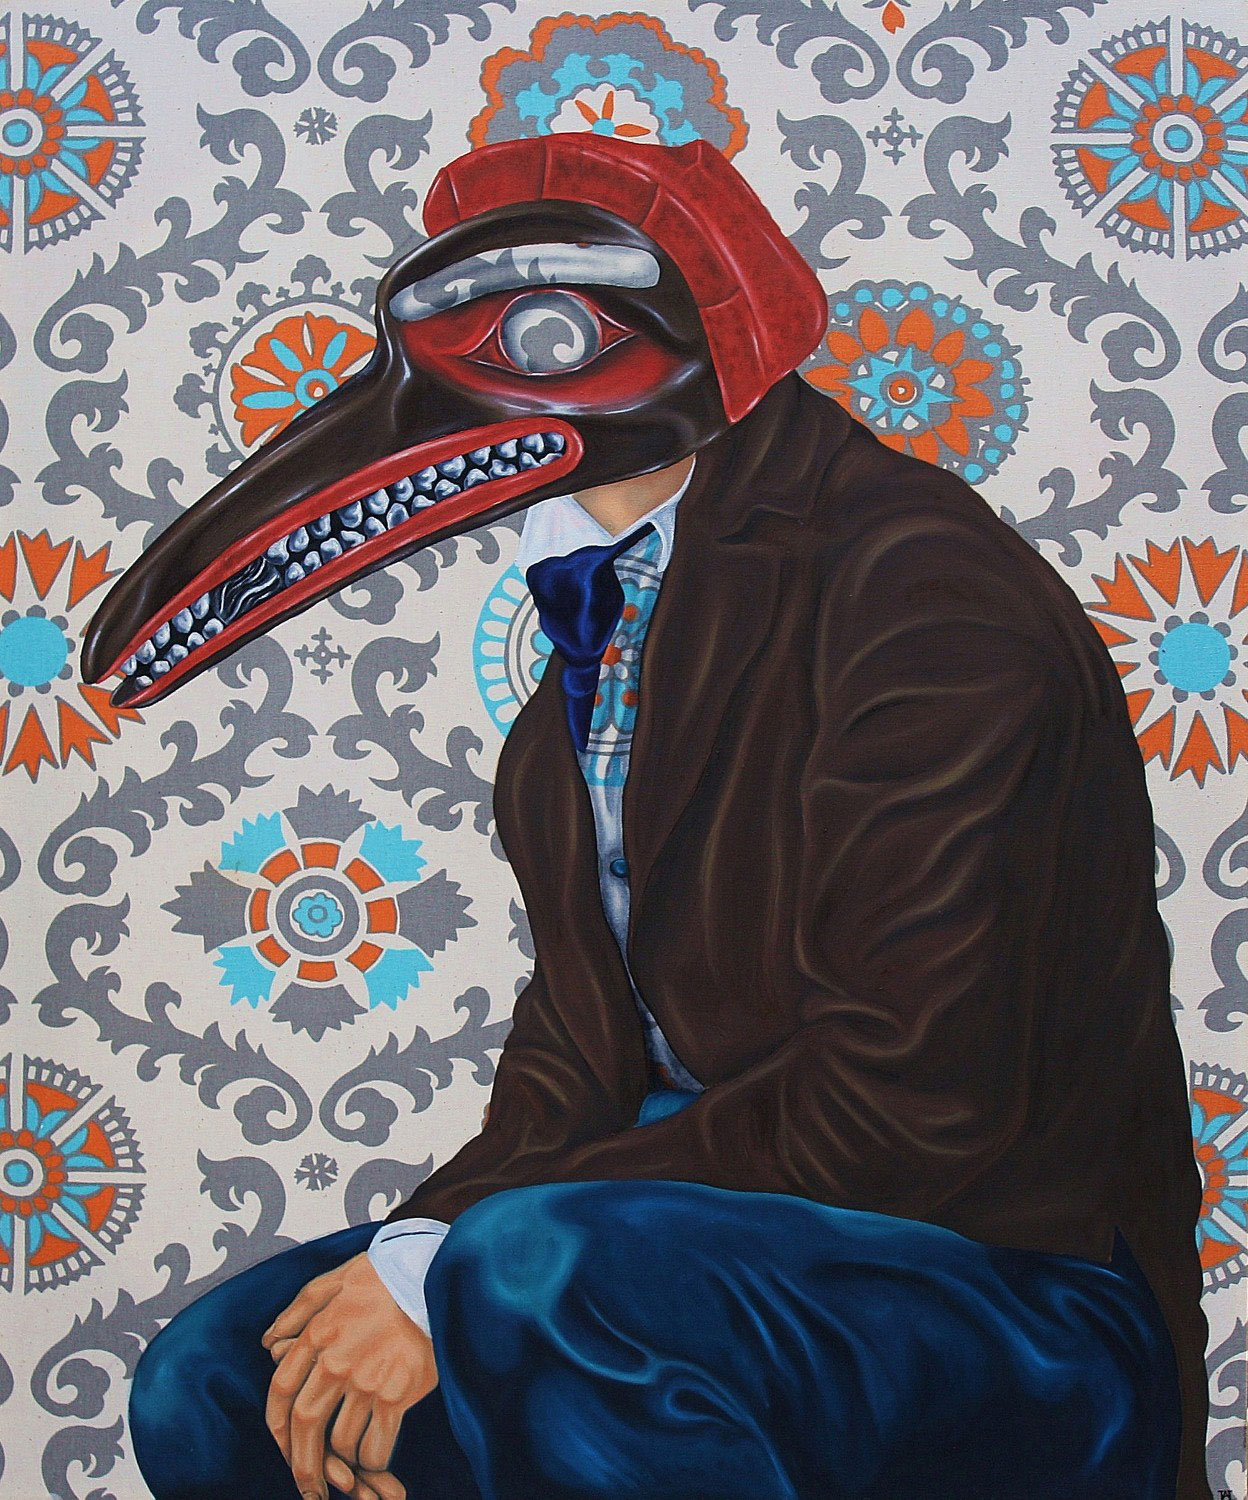 Alea Hurst, The Seer, 2013. Oil on fabric, 36 x 30 in.